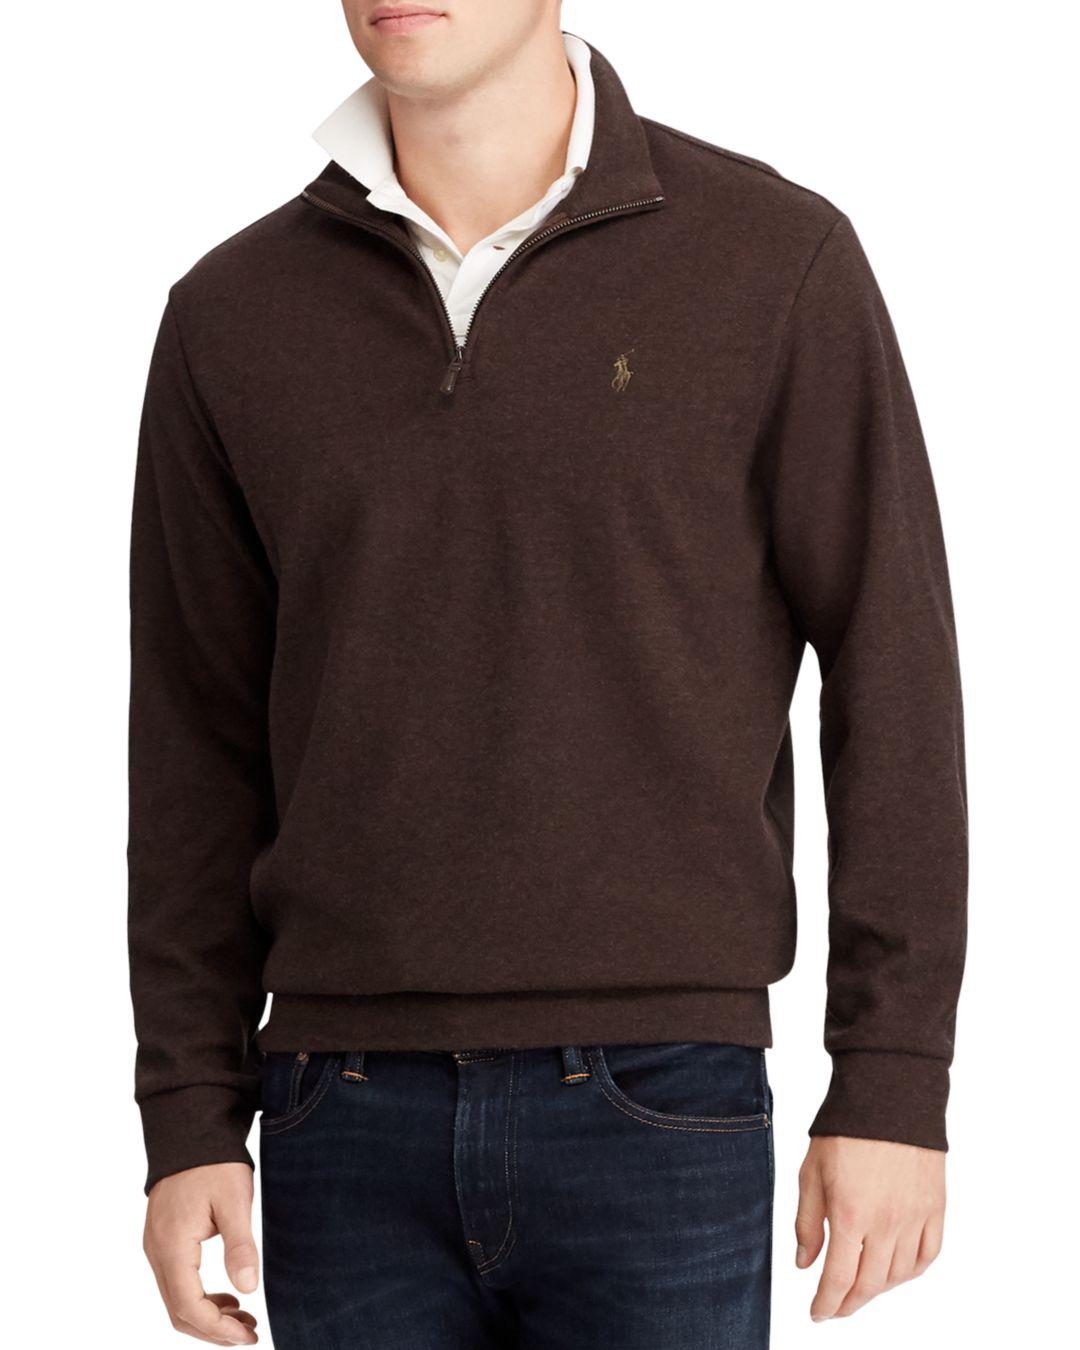 Lyst - Polo Ralph Lauren Double-knit Half-zip Pullover Sweater in Brown ...